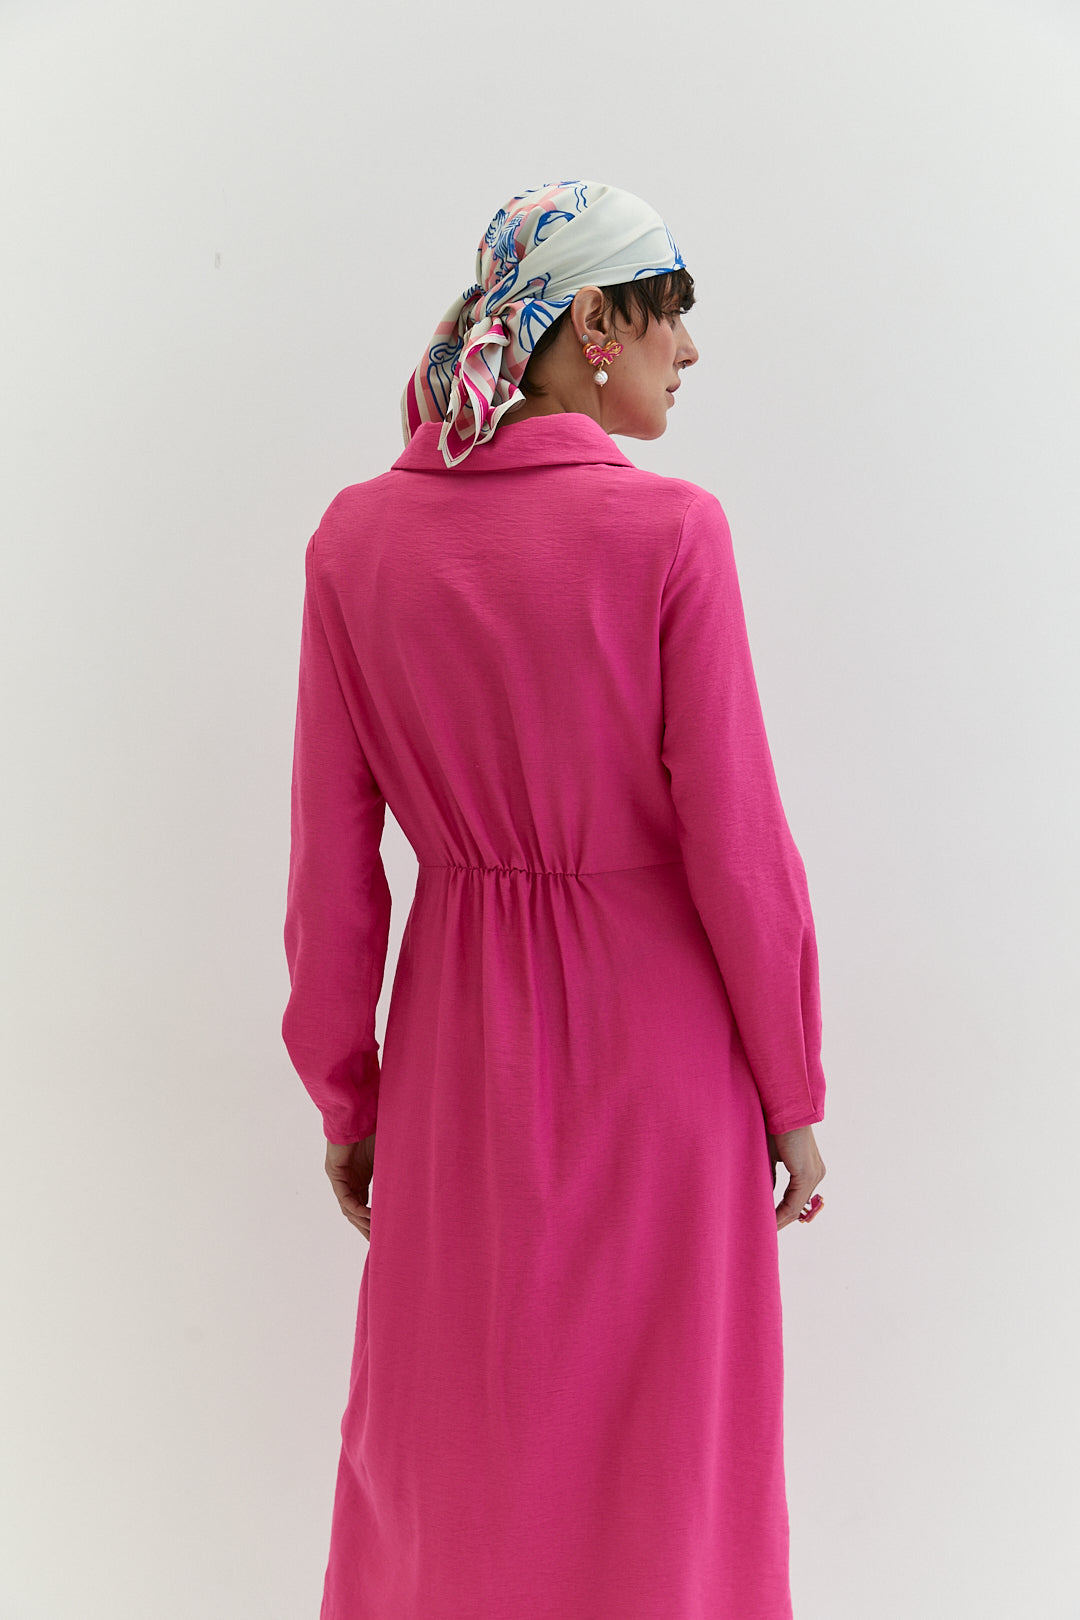 Dress “Liana” made of soft crepe linen